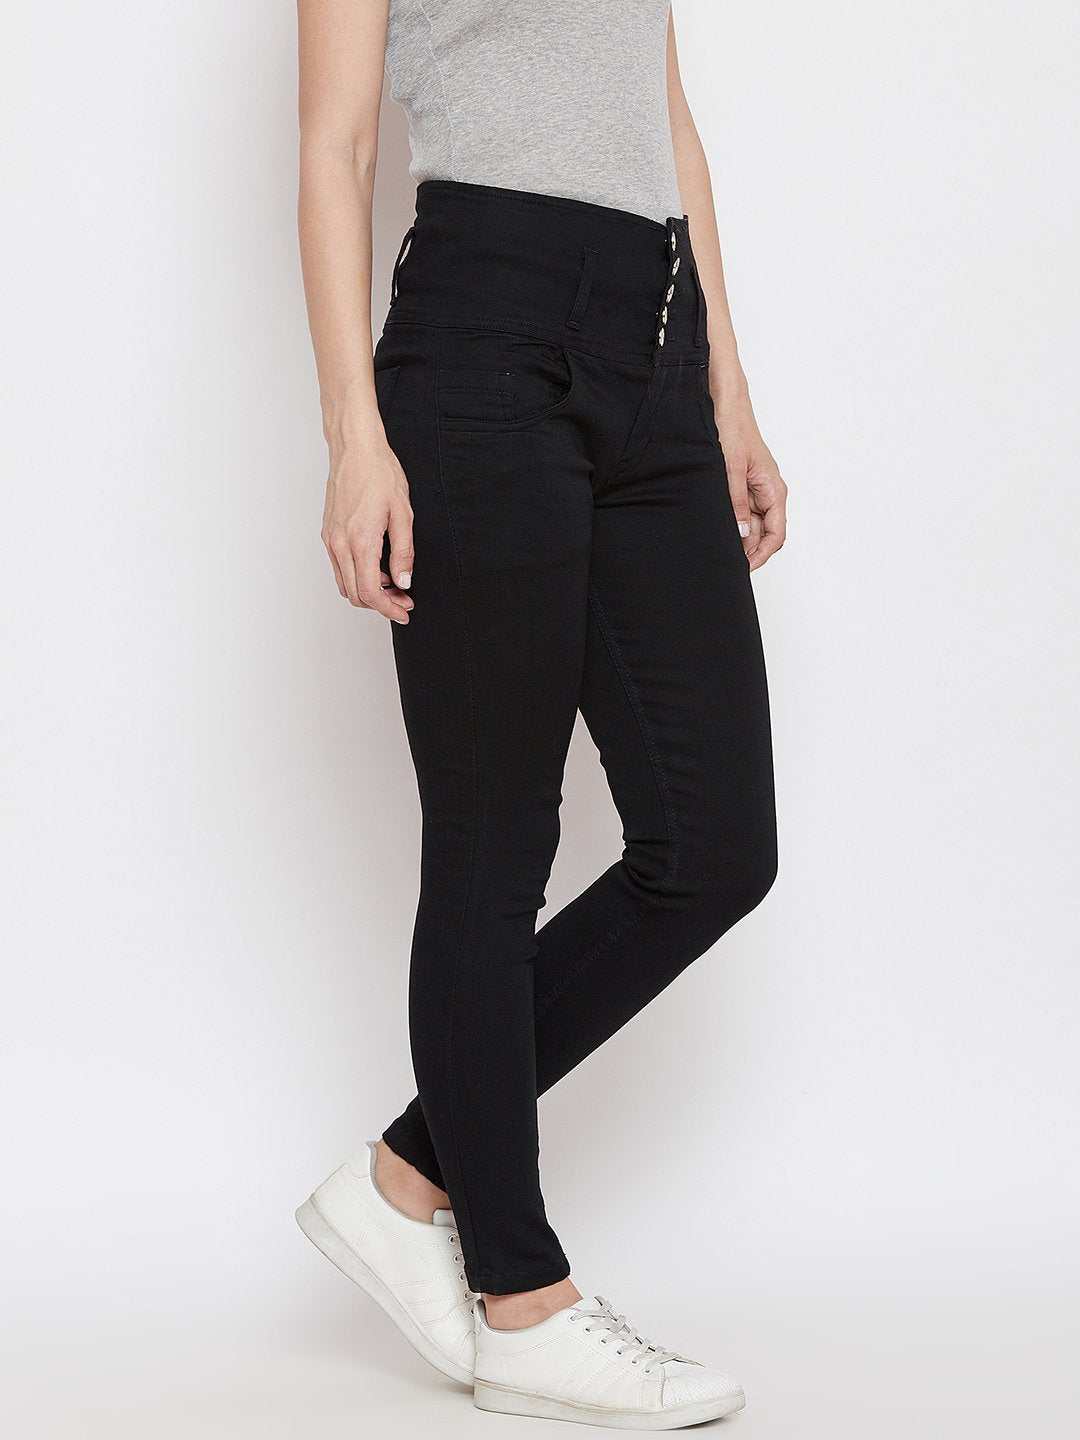 High Waist 5 button Black Jeans - NiftyJeans